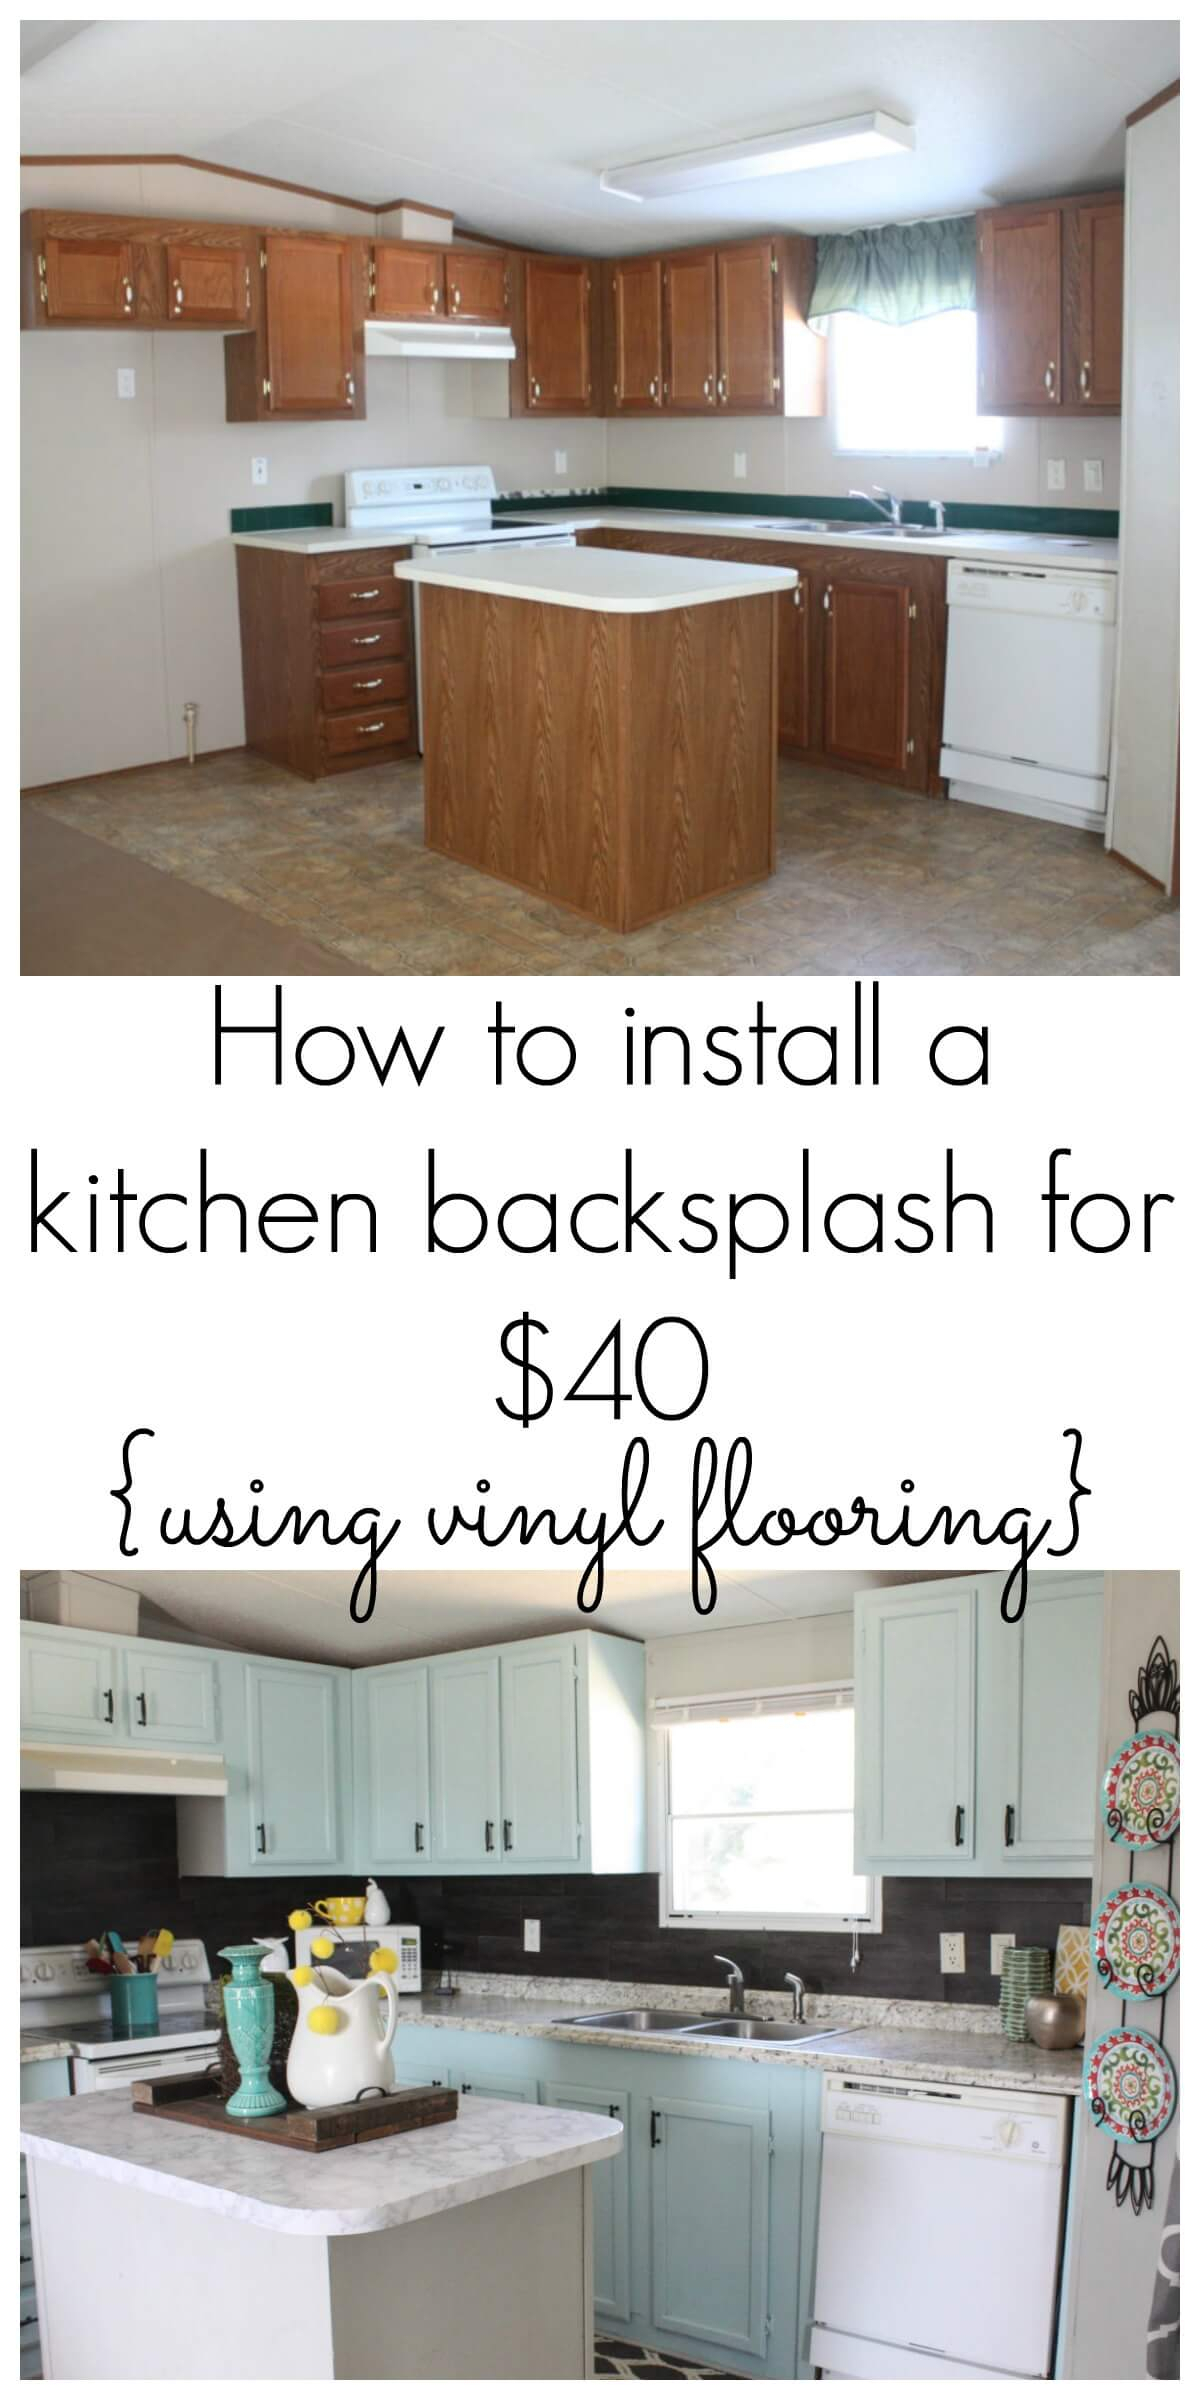 10 Nice Inexpensive Backsplash Ideas For Kitchen 25 best diy kitchen backsplash ideas and designs for 2019 2 2022